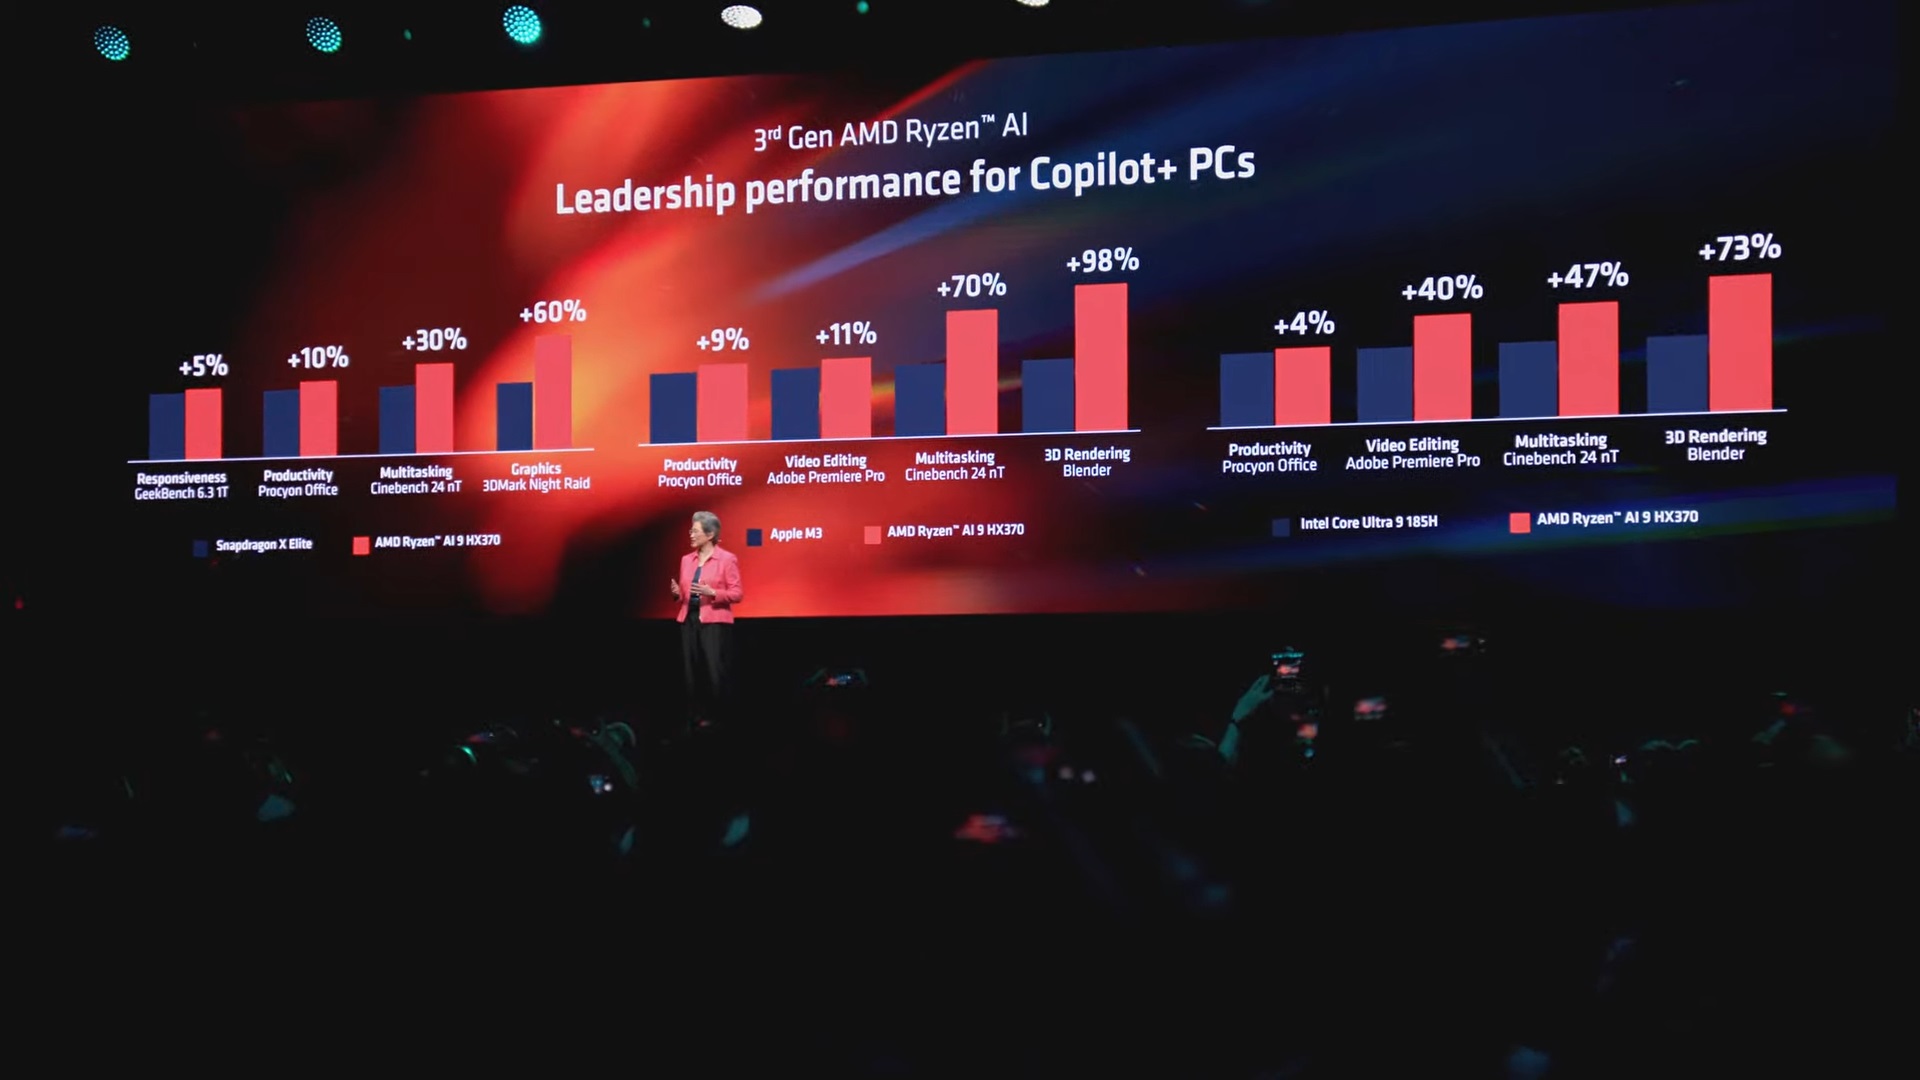 AMD CEO Lisa Su presenting performance for Ryzen AI CPUs.